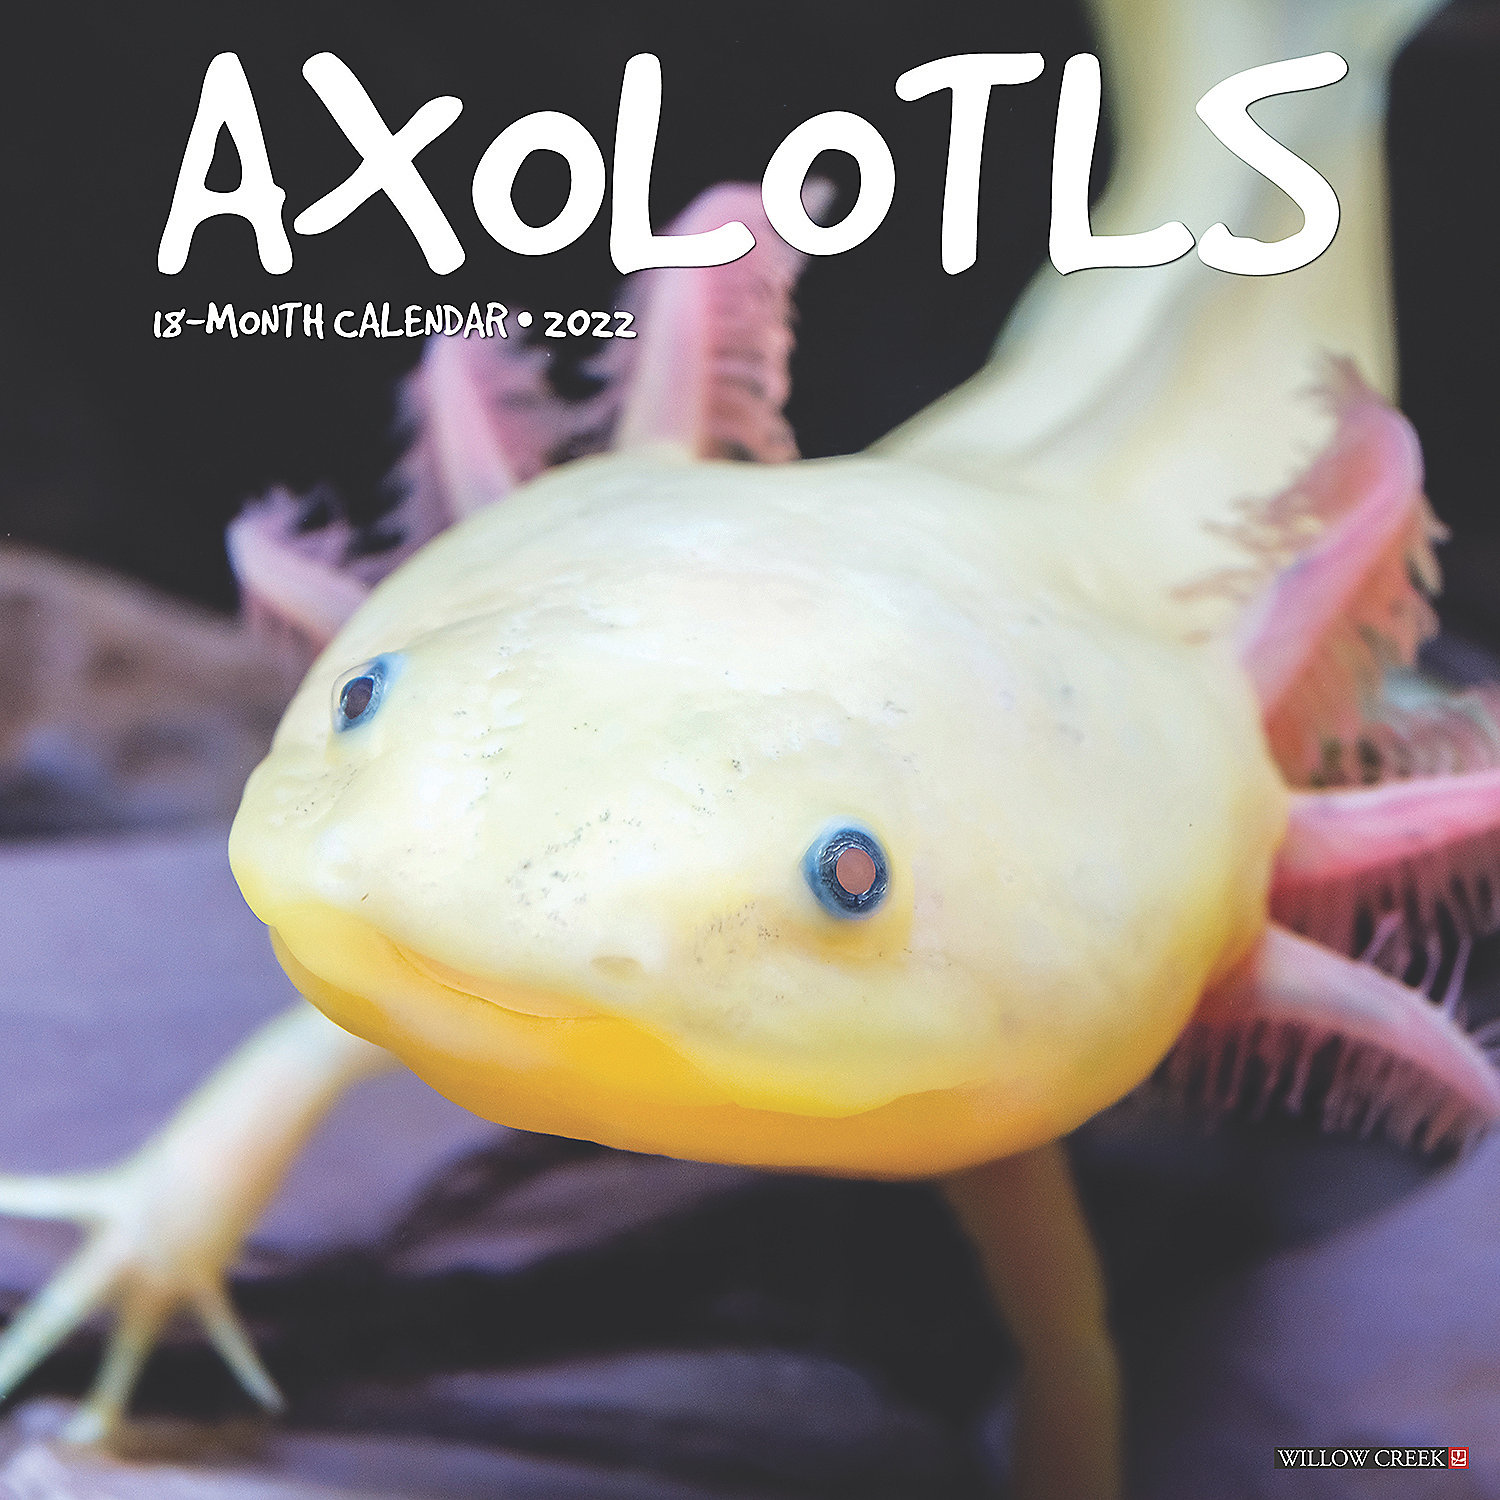 Axolotl pronounce